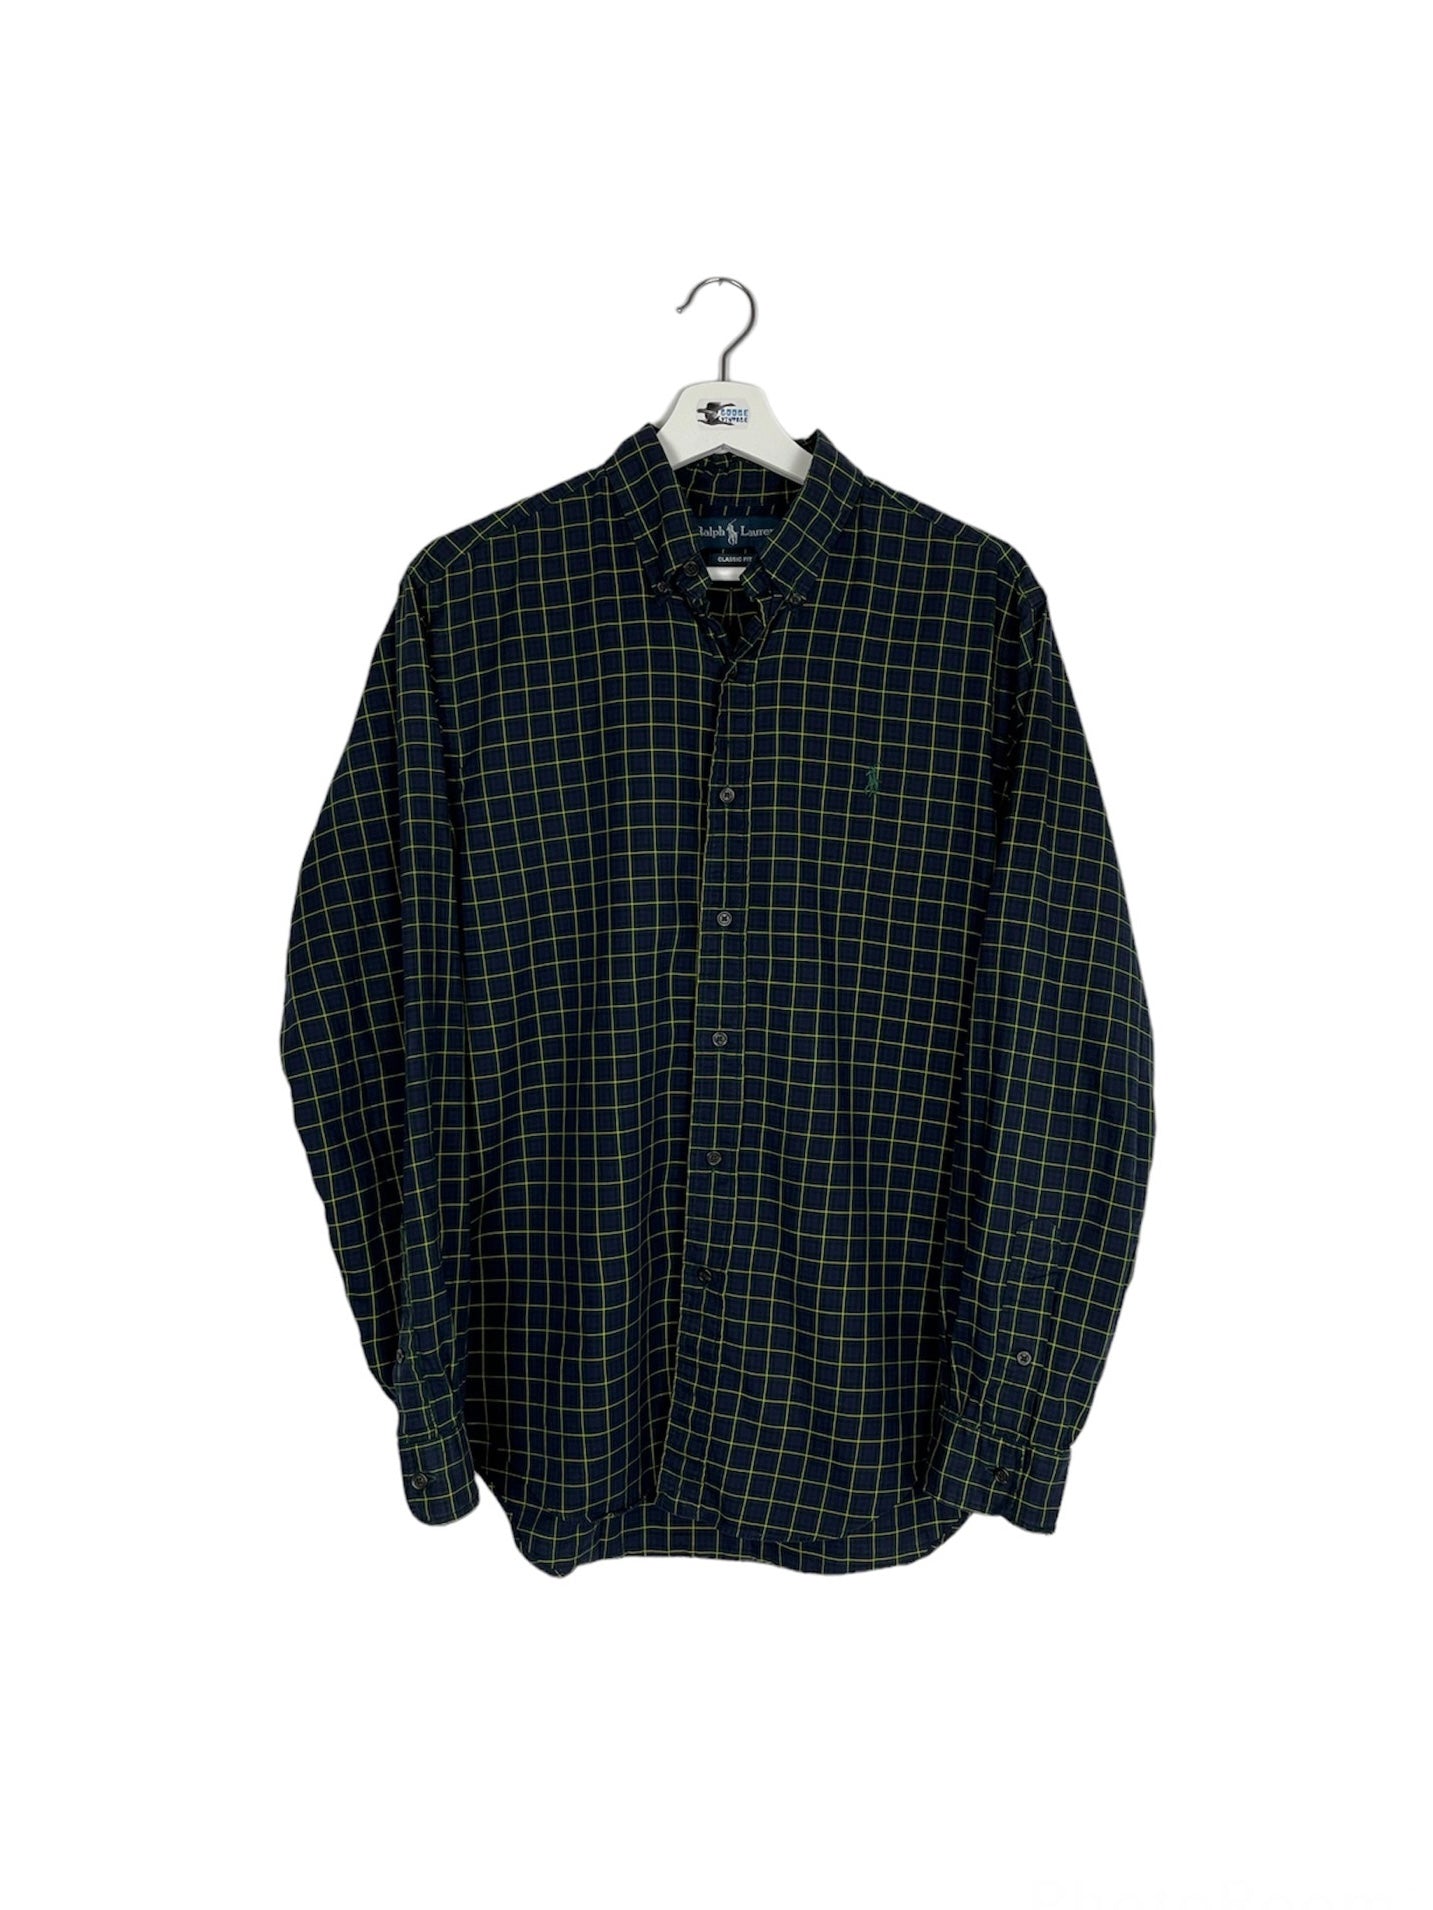 Vintage 90’s Ralph Lauren Checked Shirt - Medium